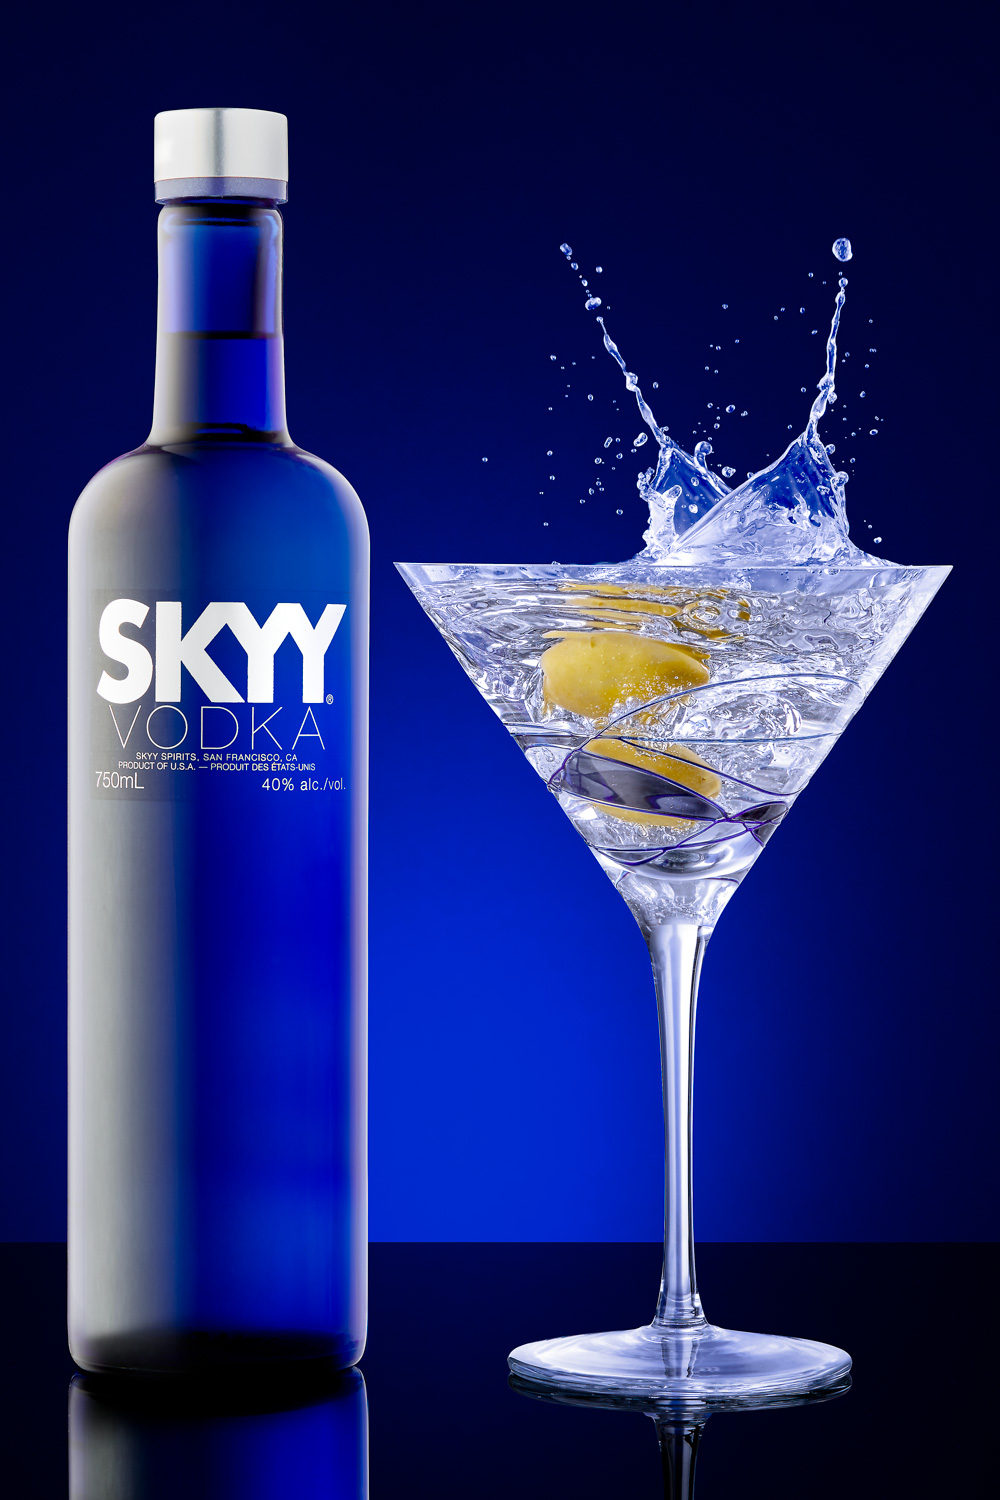 2-studio-splash-photography-professional-product-photographer-alcohol-liquor-drink-martini-advertising-splash-blue-studio-light-commercial-sales-marketing-table-top-bar-restaurant-ad-vodka-daniel-buehler-toronto-danbcreative.jpg